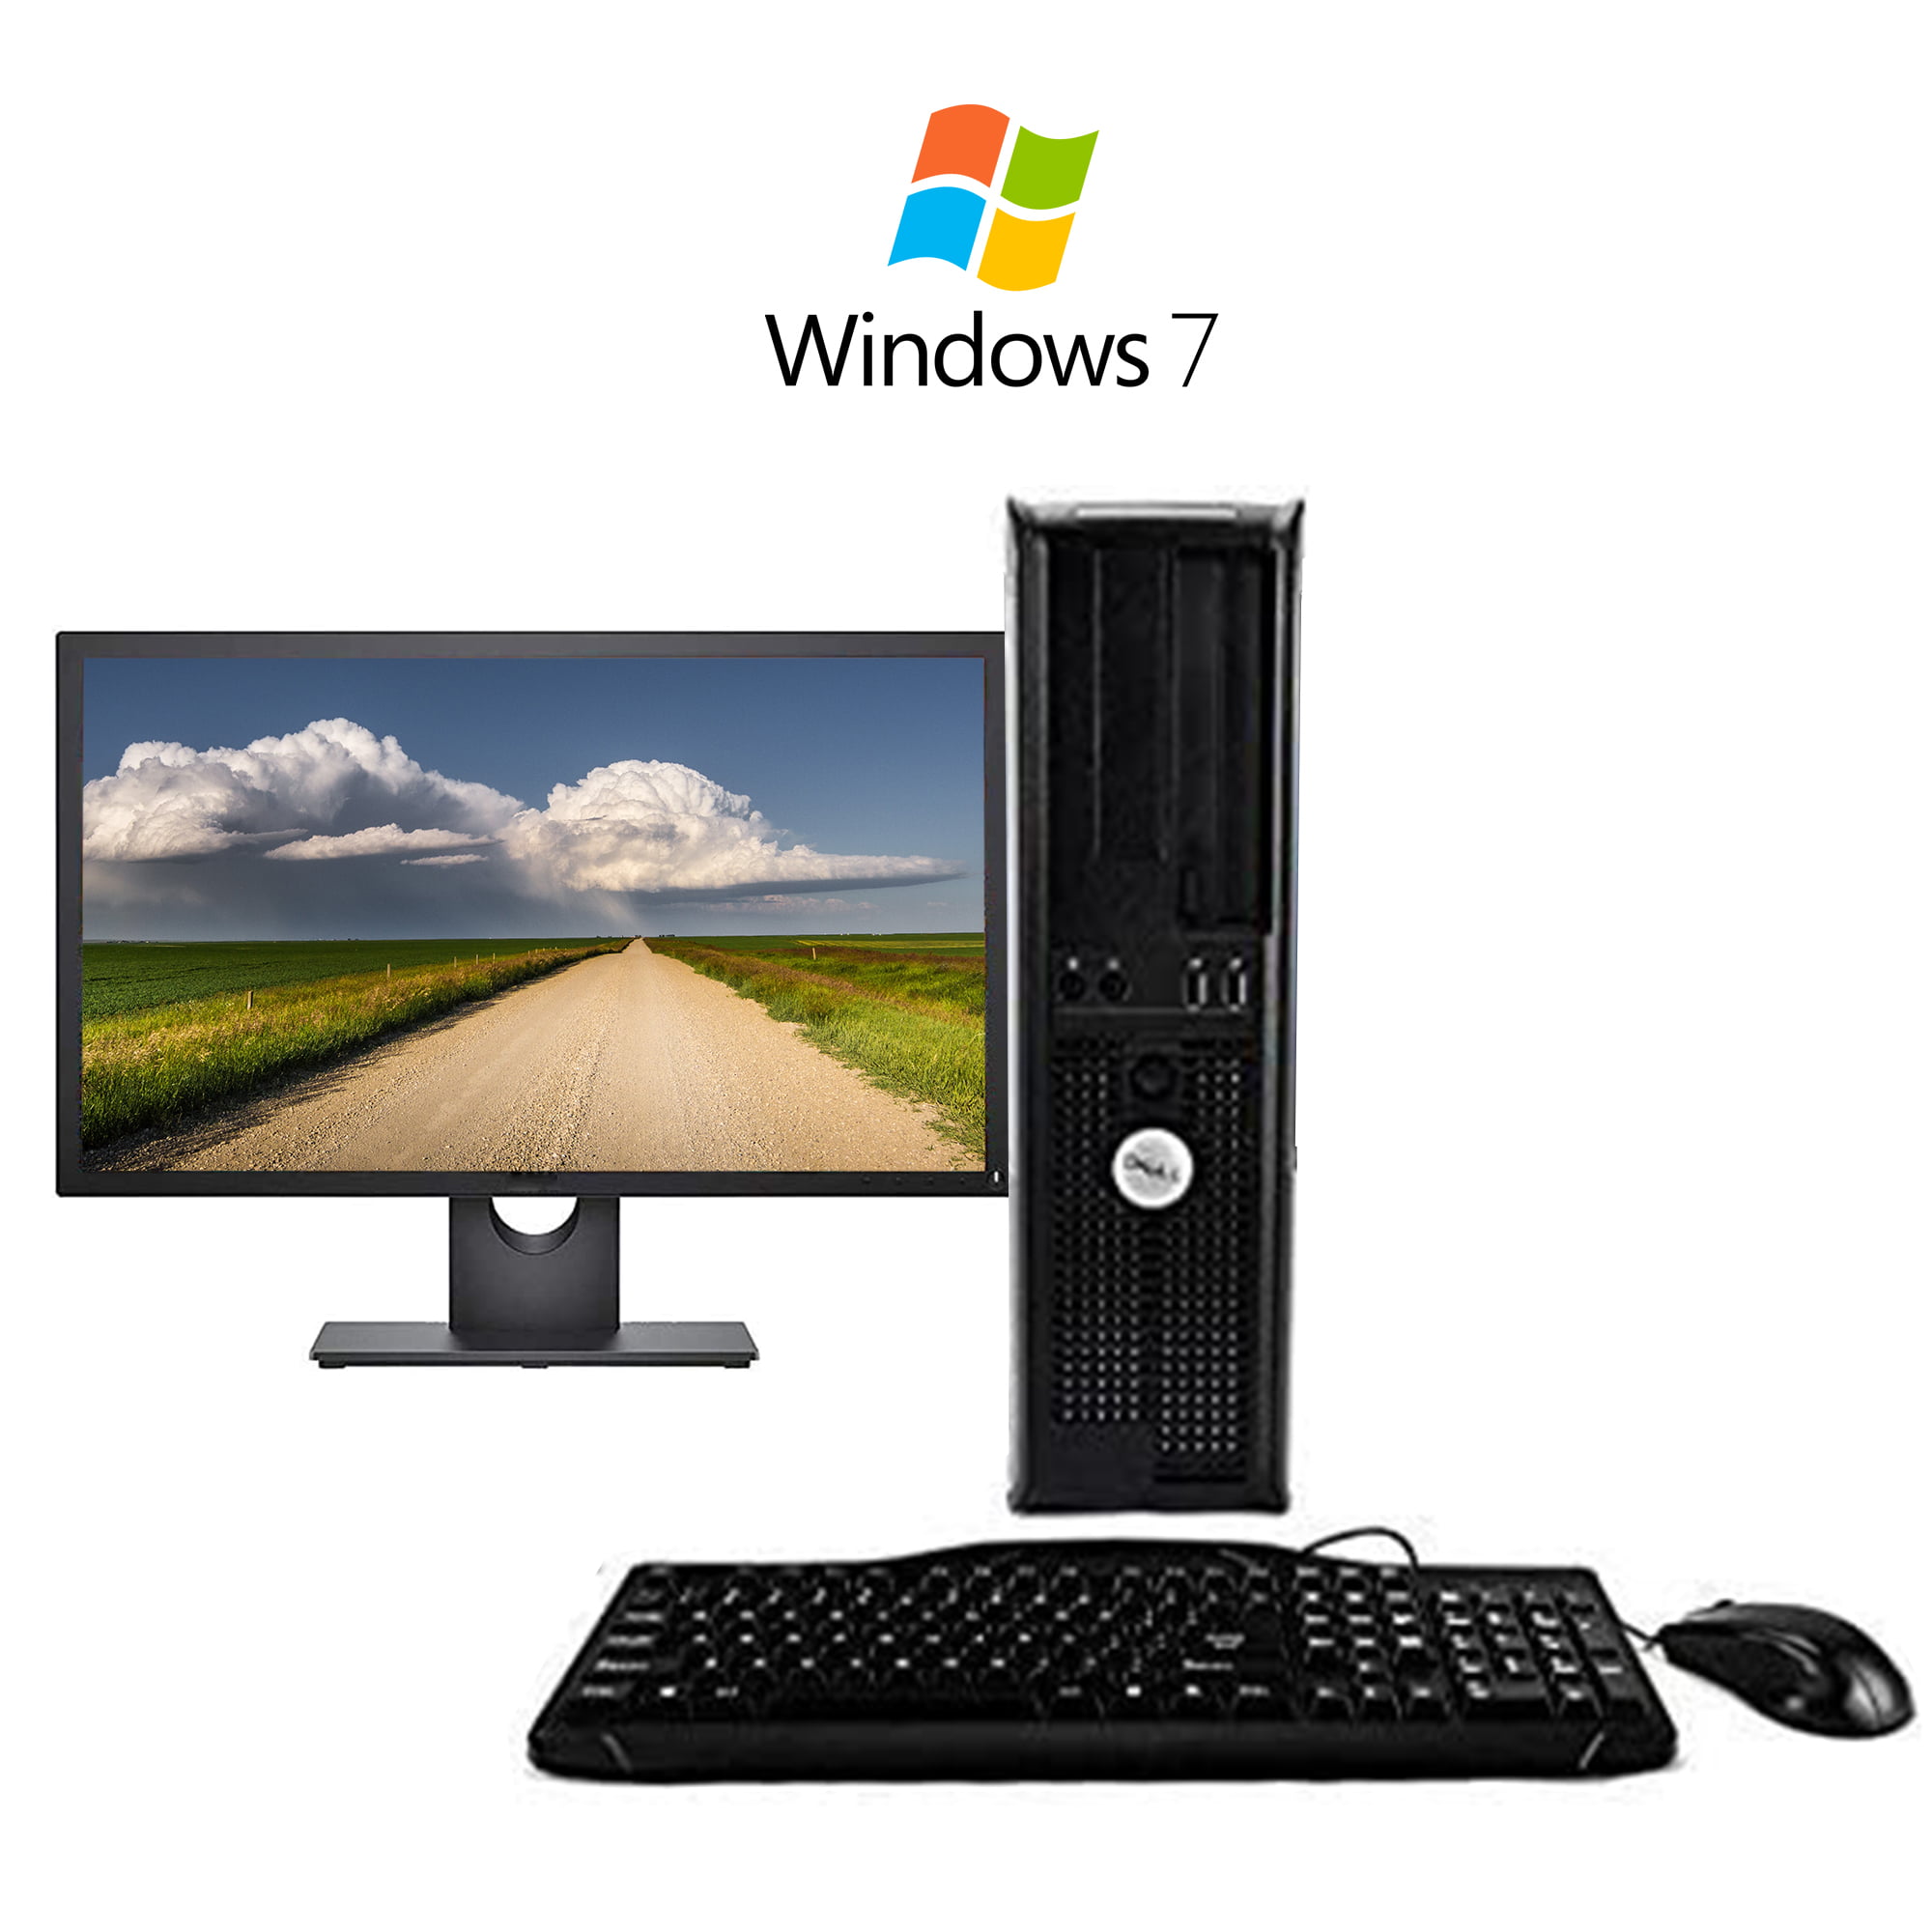 Windows 7 Dell OptiPlex Desktop Computer PC Intel Core 2 Duo 8GB RAM 1TB HD  DVD Wi-Fi Dual 19